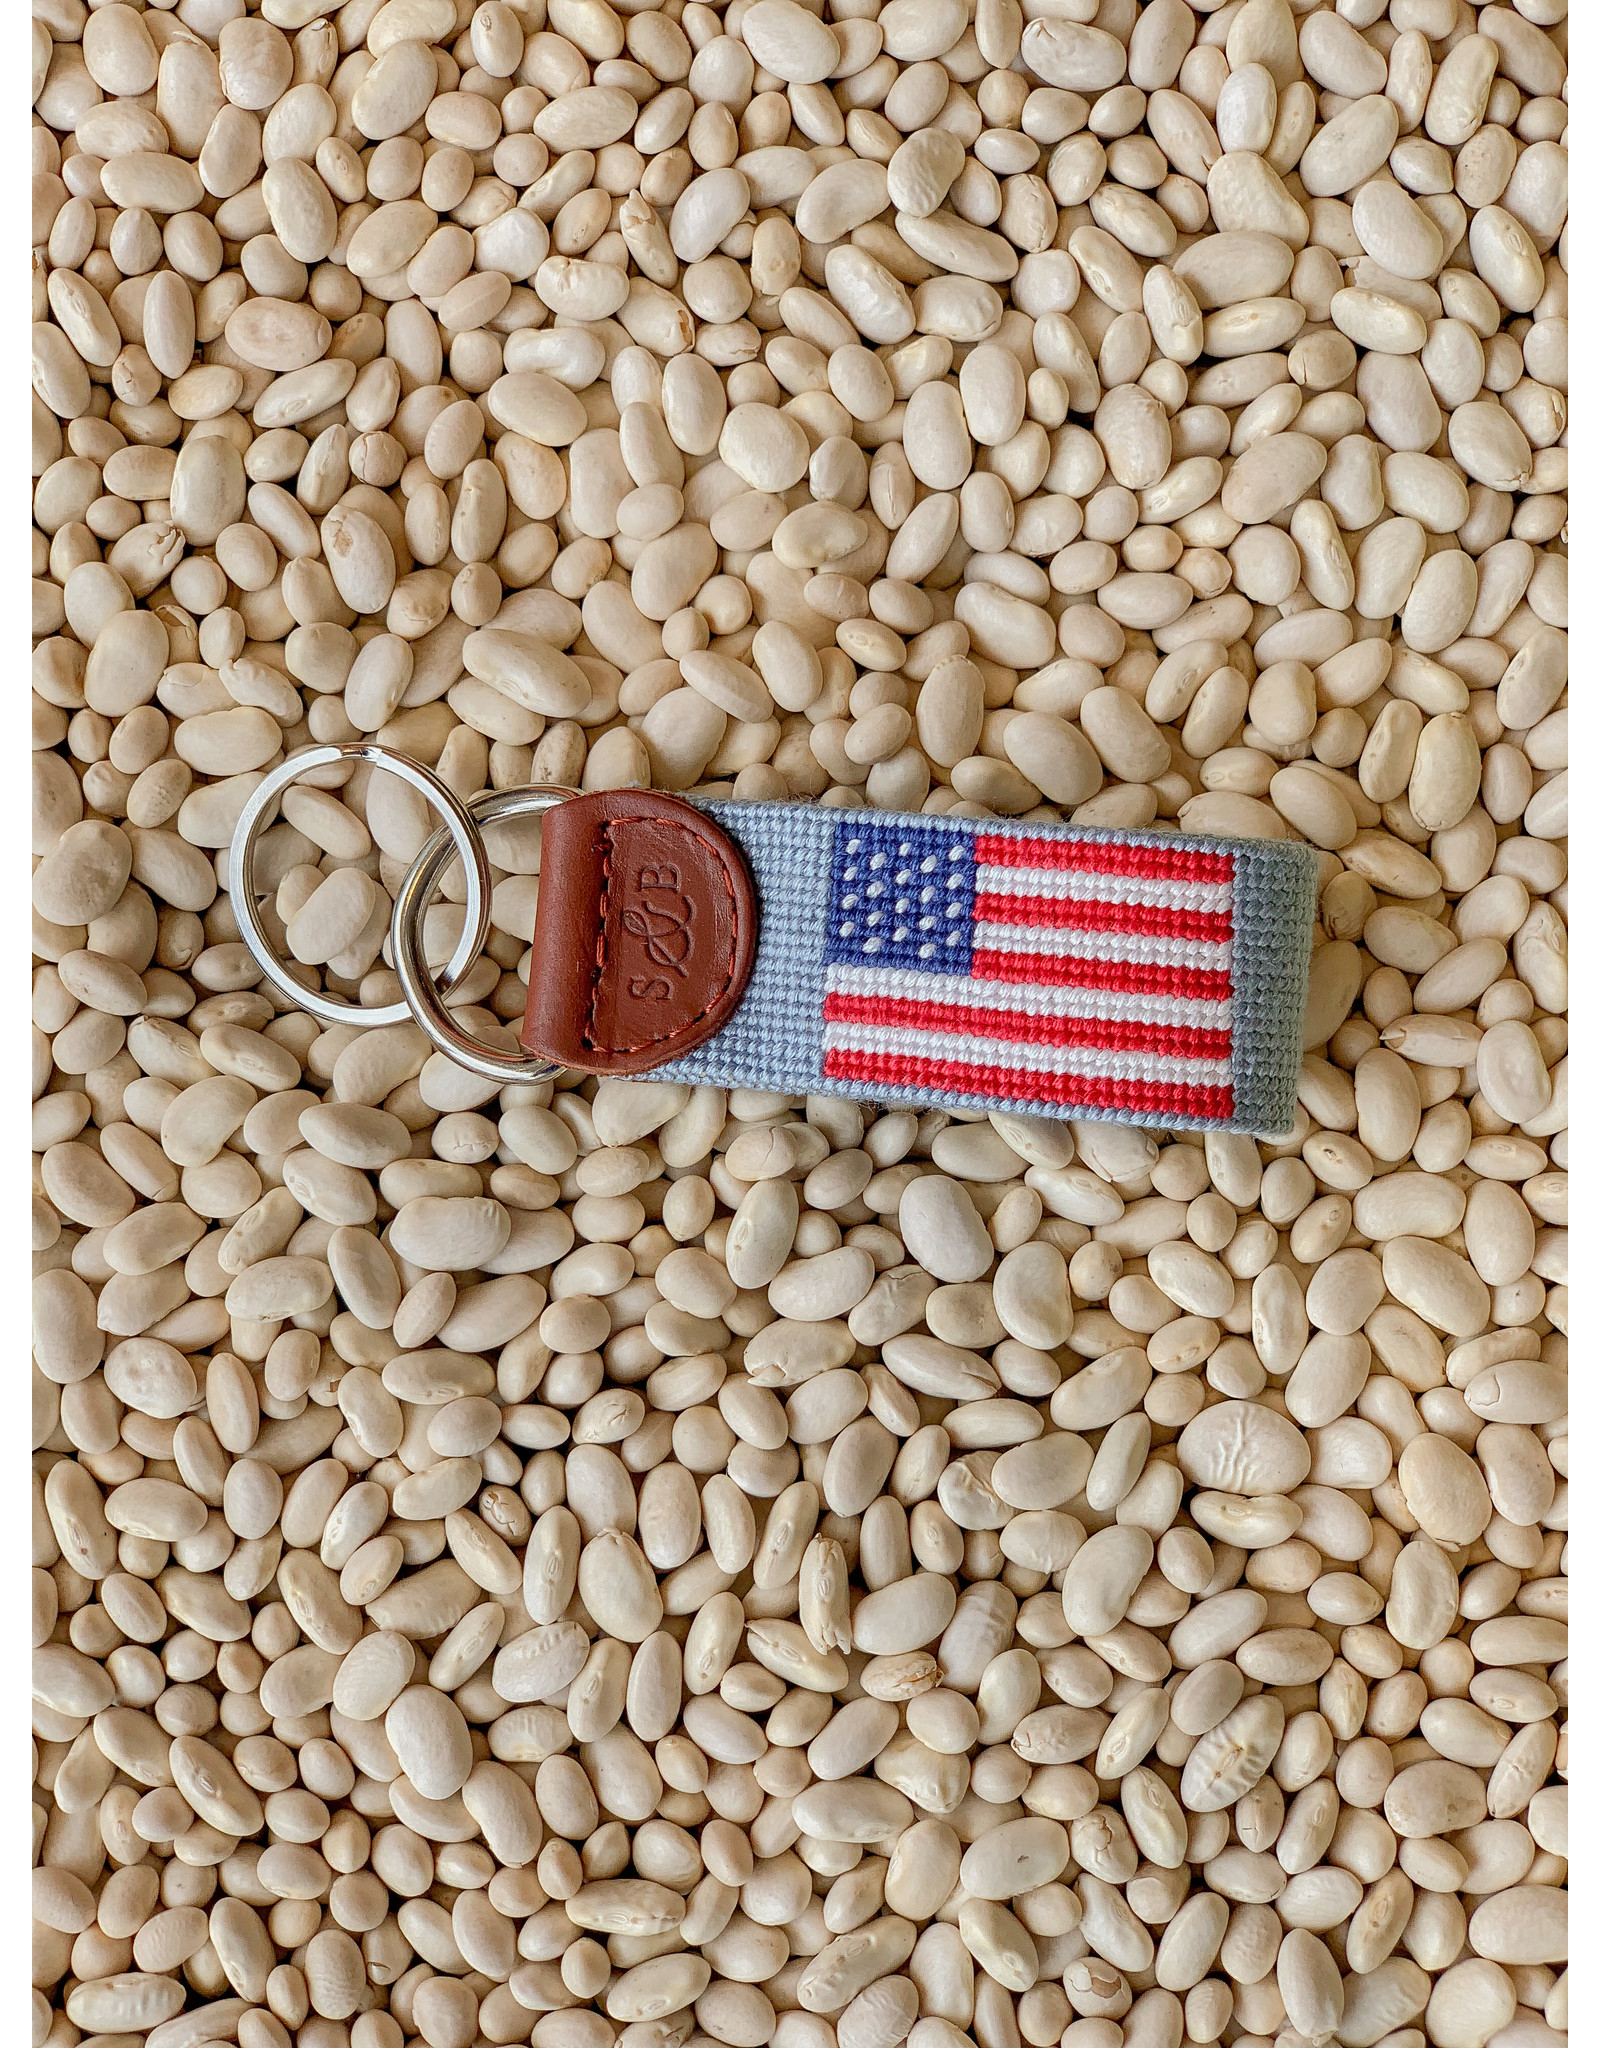 Smathers & Branson S&B Needlepoint Key Fob, American Flag